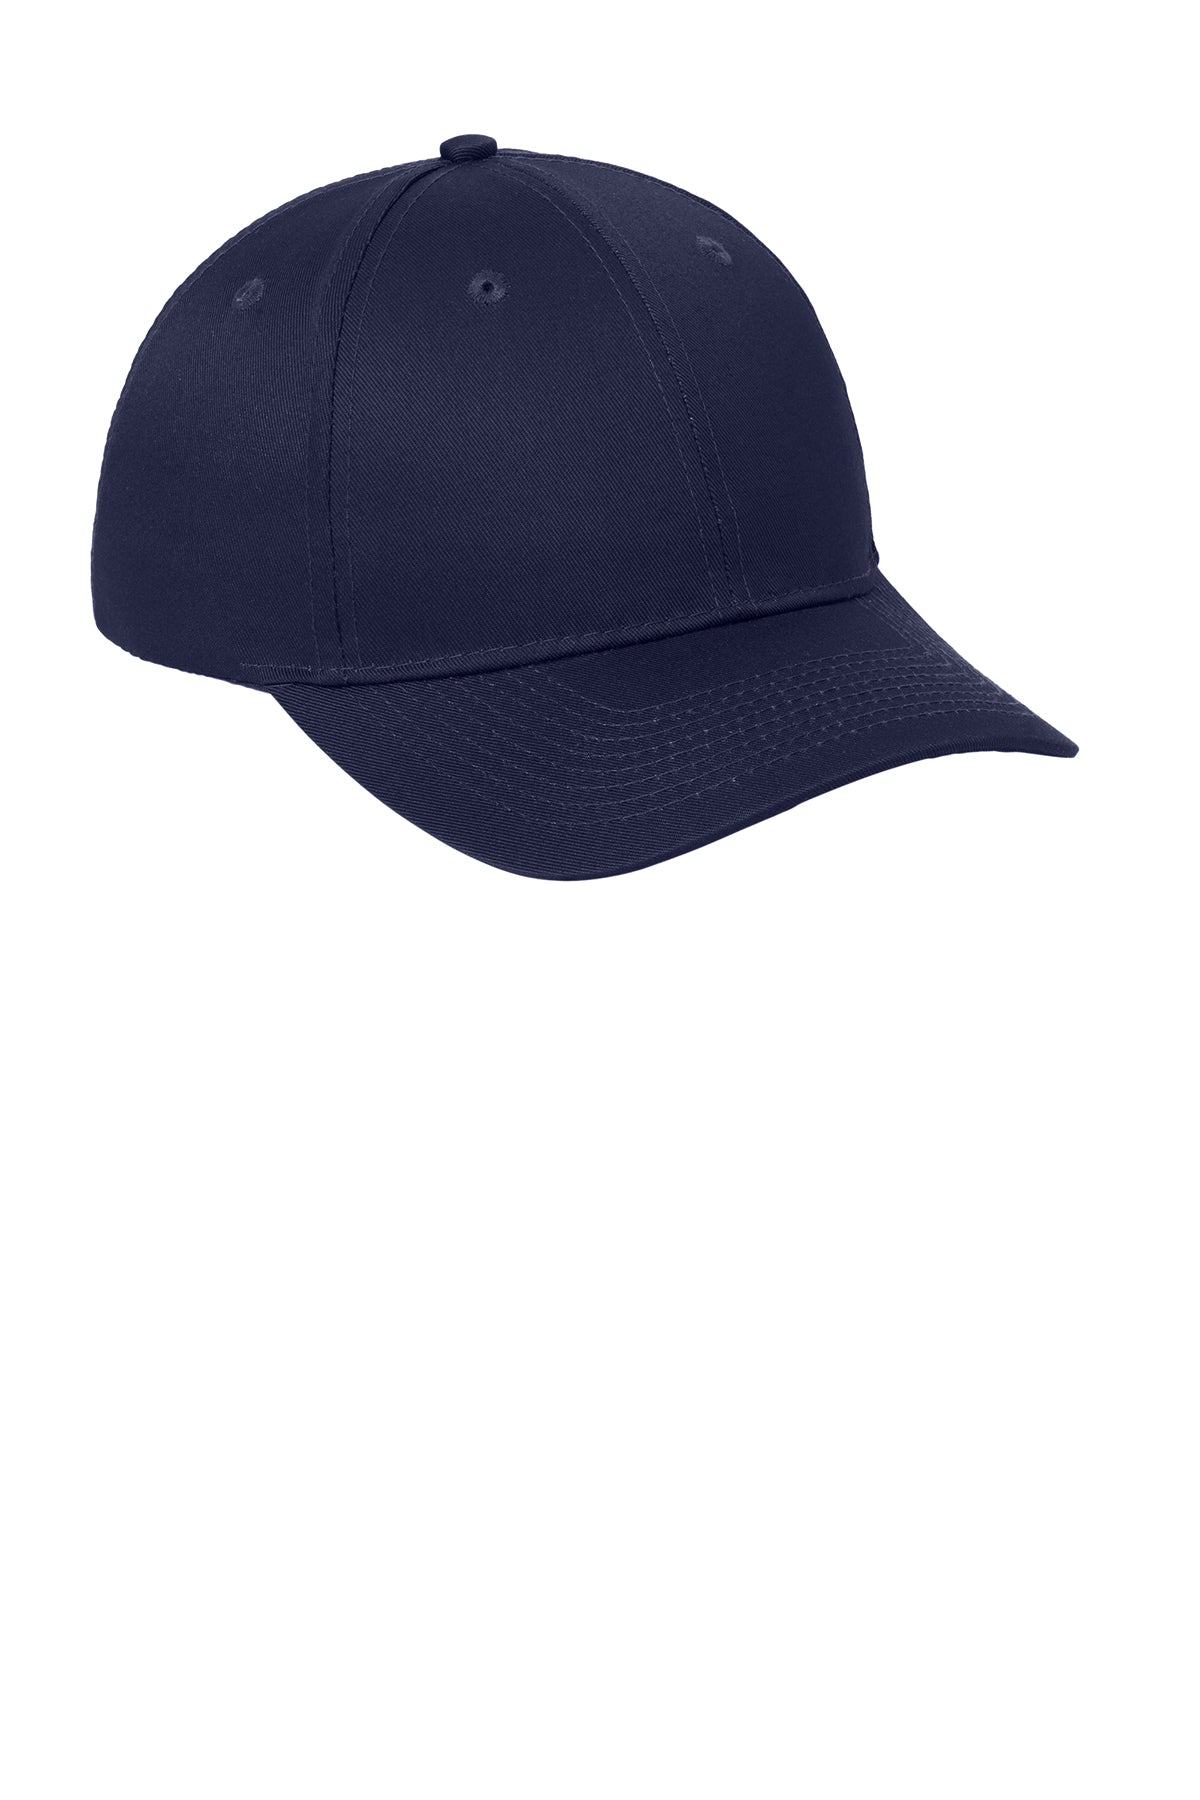 Port Authority Uniforming Branded Twill Caps, Navy